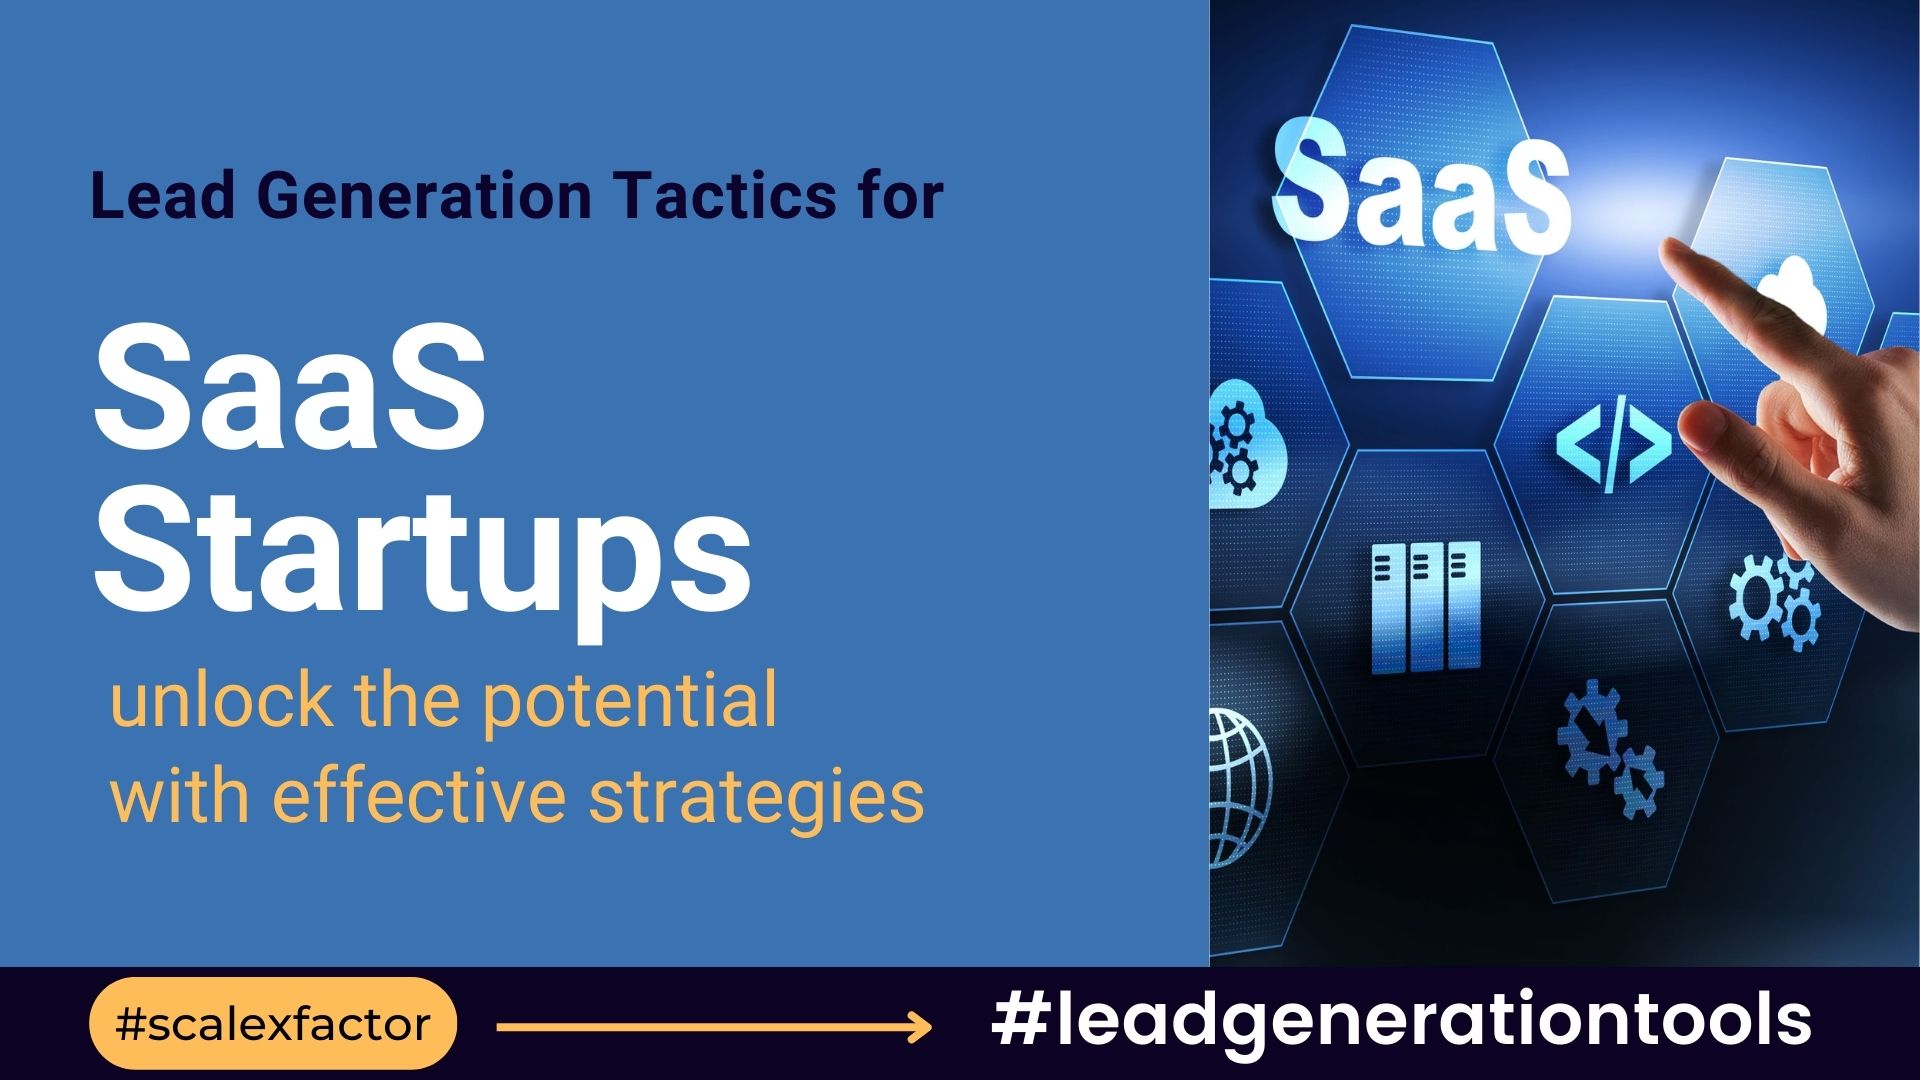 Lead Generation Tactics for SaaS Startups using Lead Generation Tools